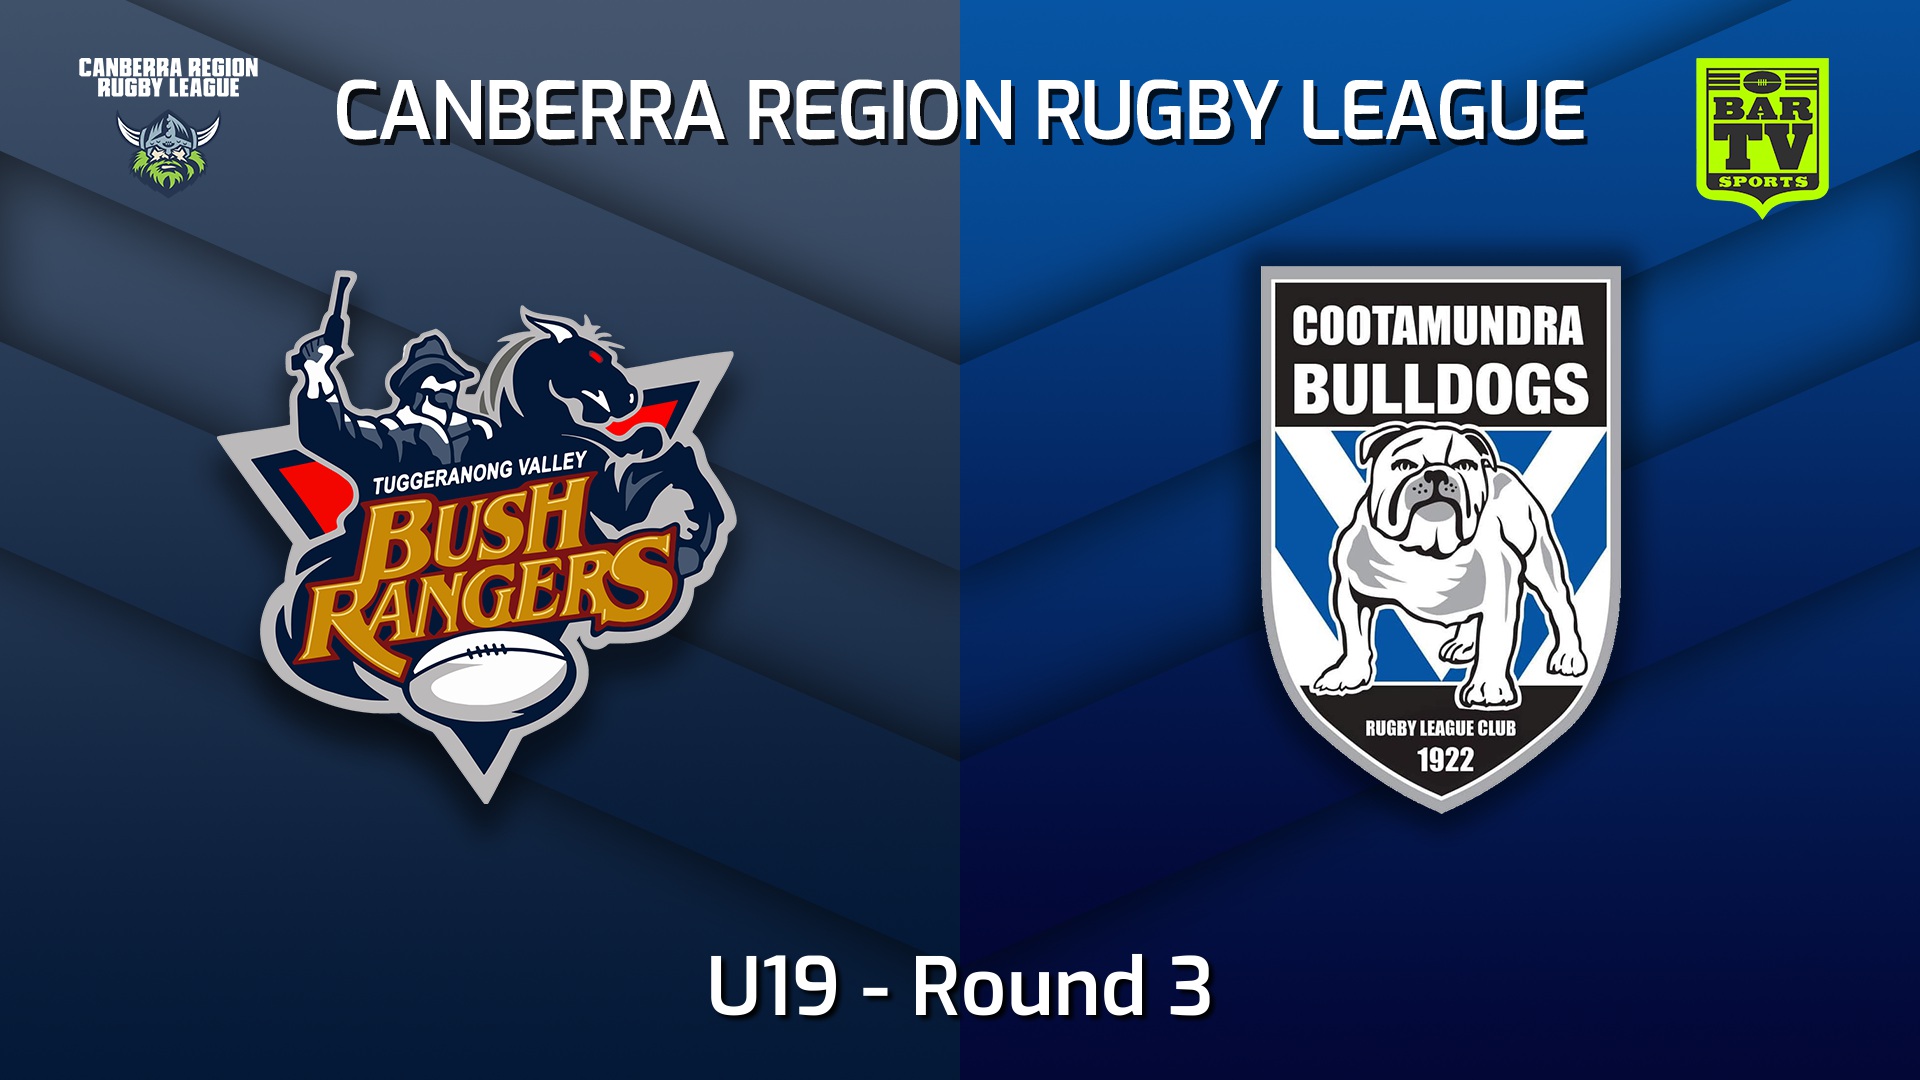 Canberra Round 3 - U19 - Tuggeranong Bushrangers v Cootamundra Bulldogs ...